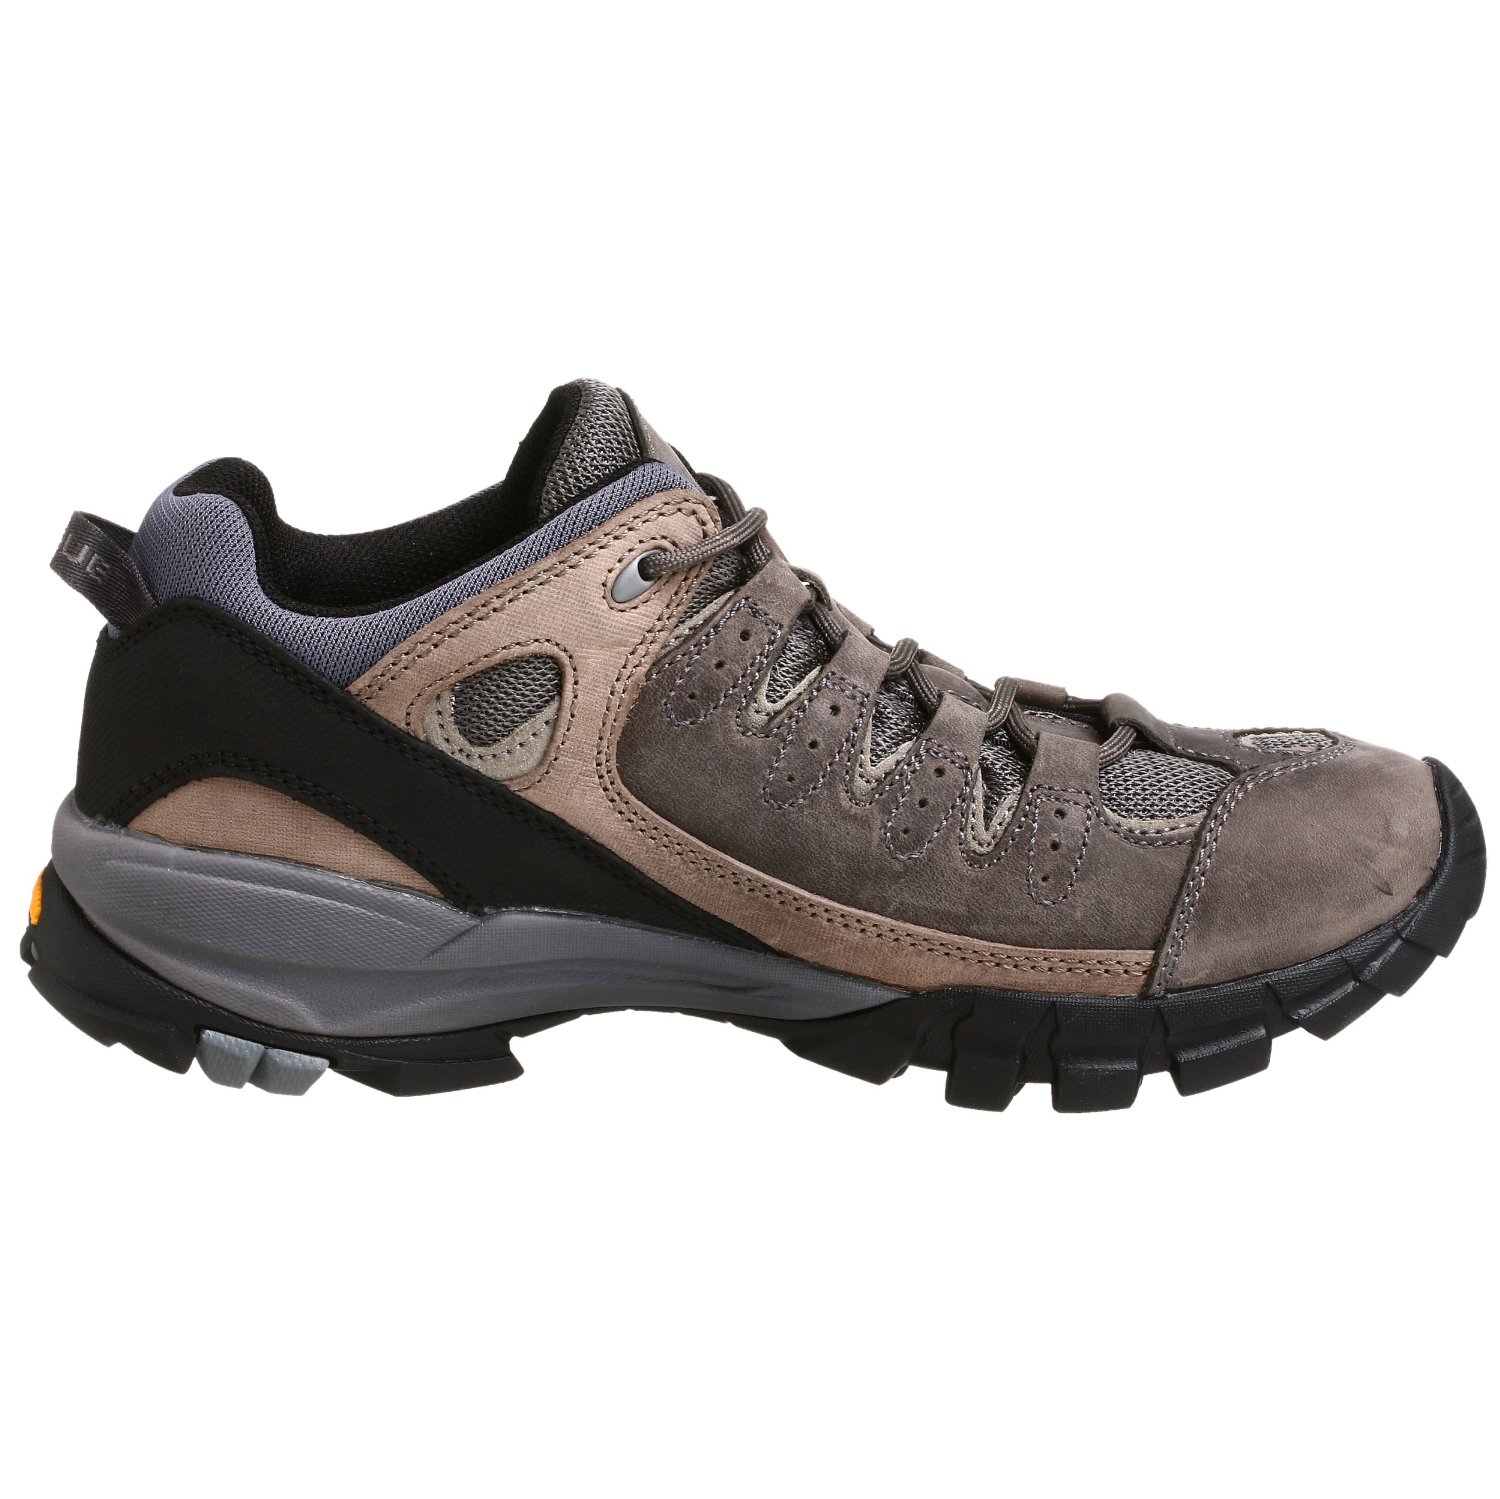 Hiking Shoes Here: Vasque Men's Mantra Hiking Shoe